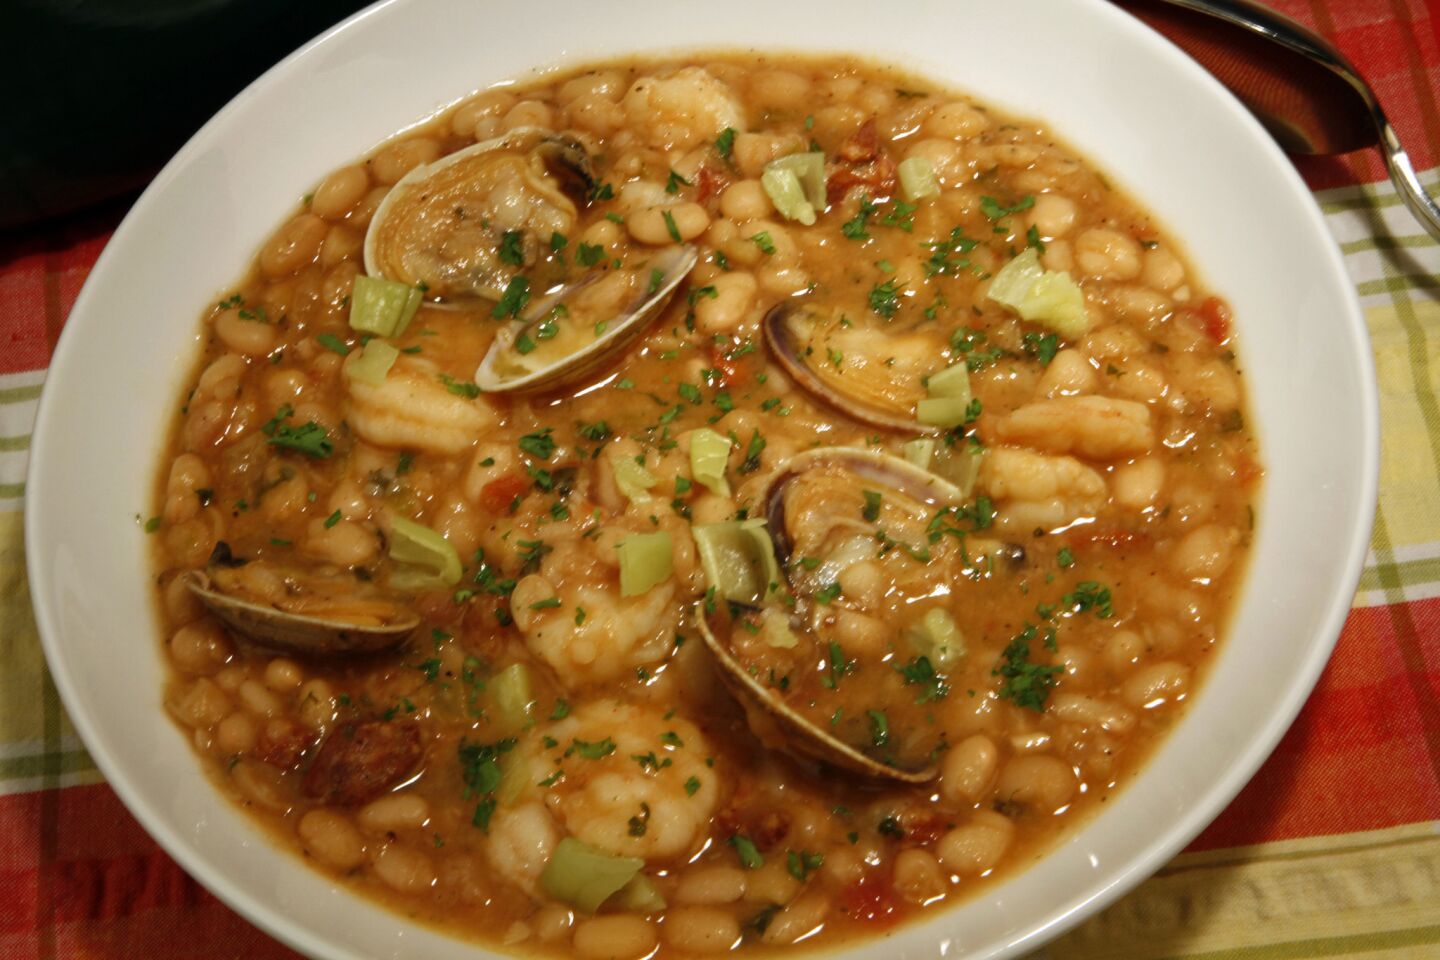 Beans with chorizo, clams and shrimp